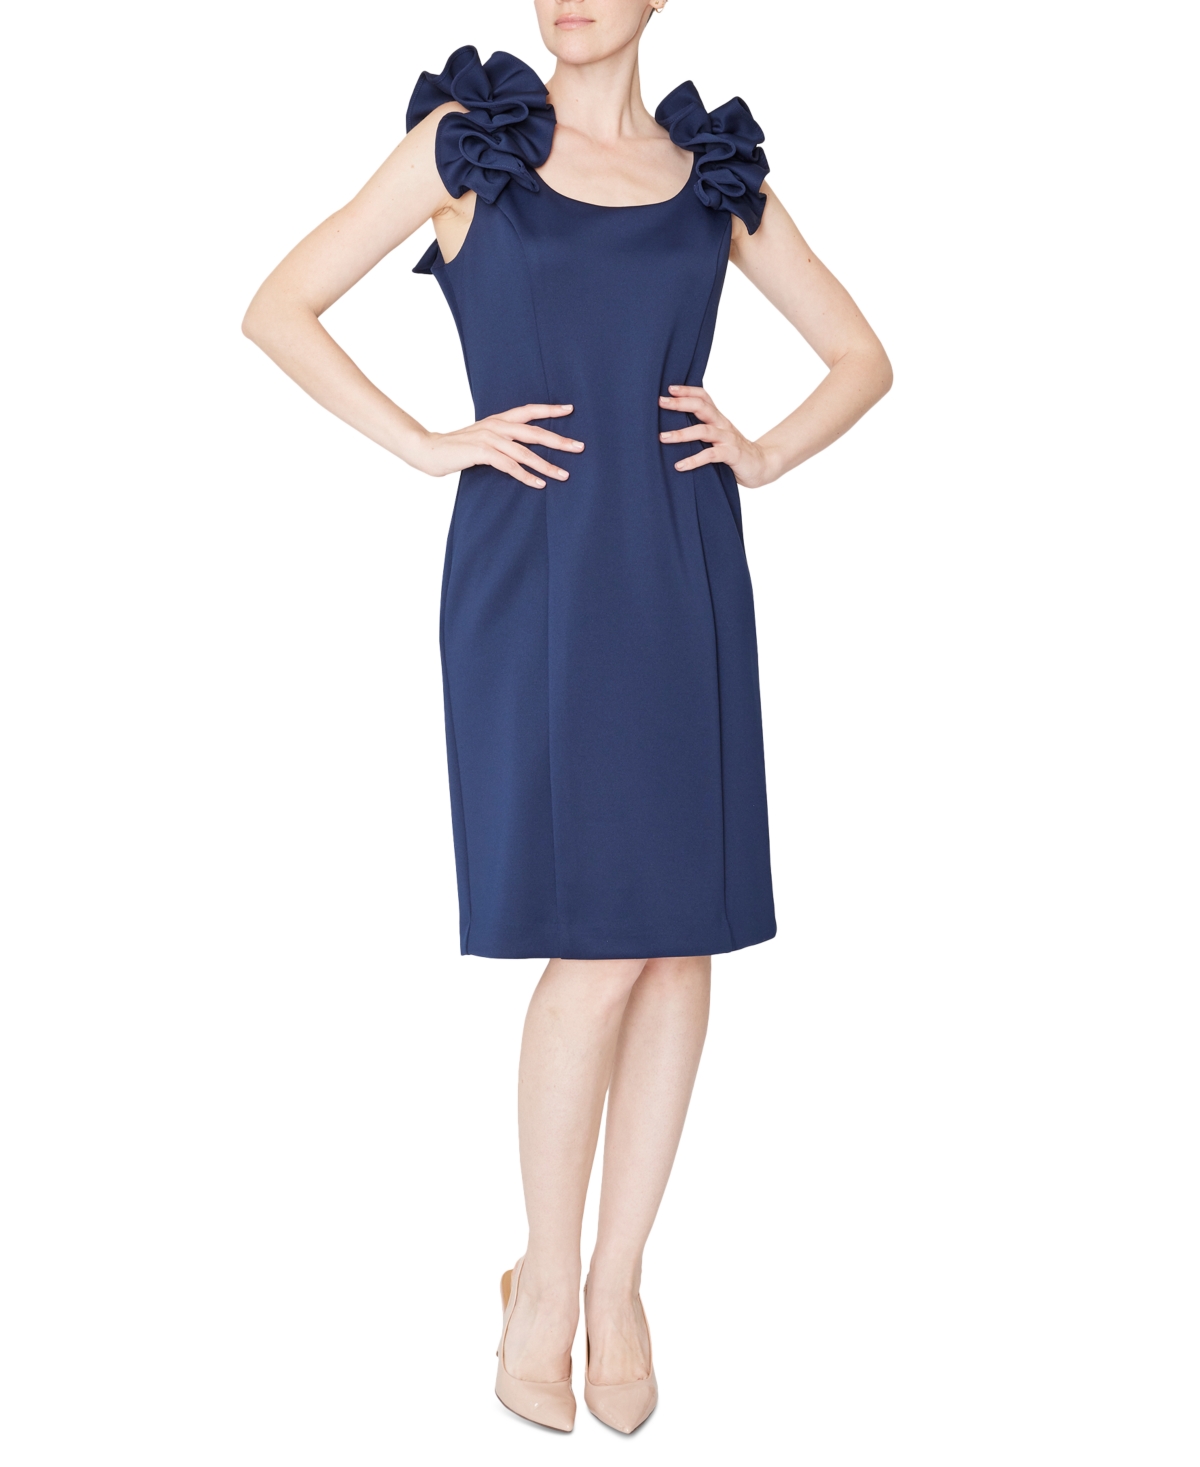 Women's Ruffled-Shoulder Sleeveless Dress - Navy